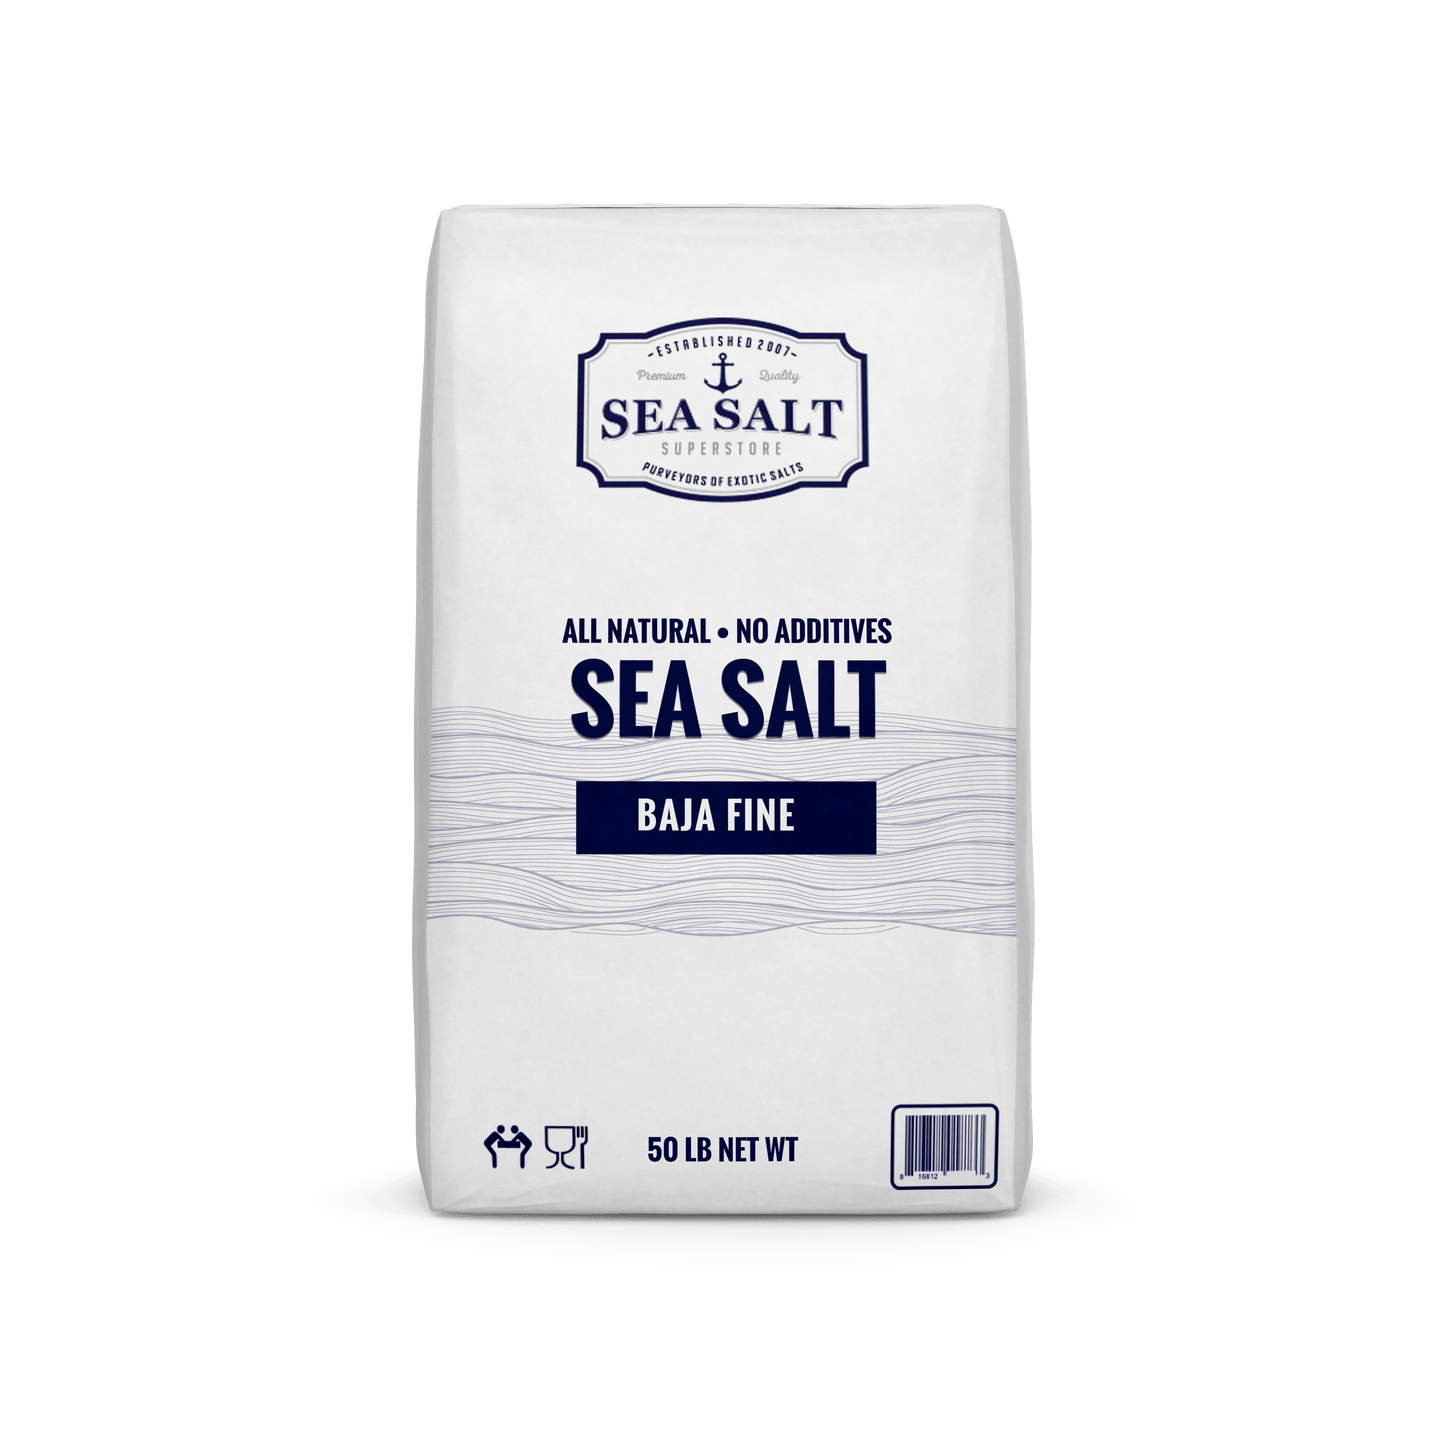 Fine Sea Salt - All Natural, No Additives